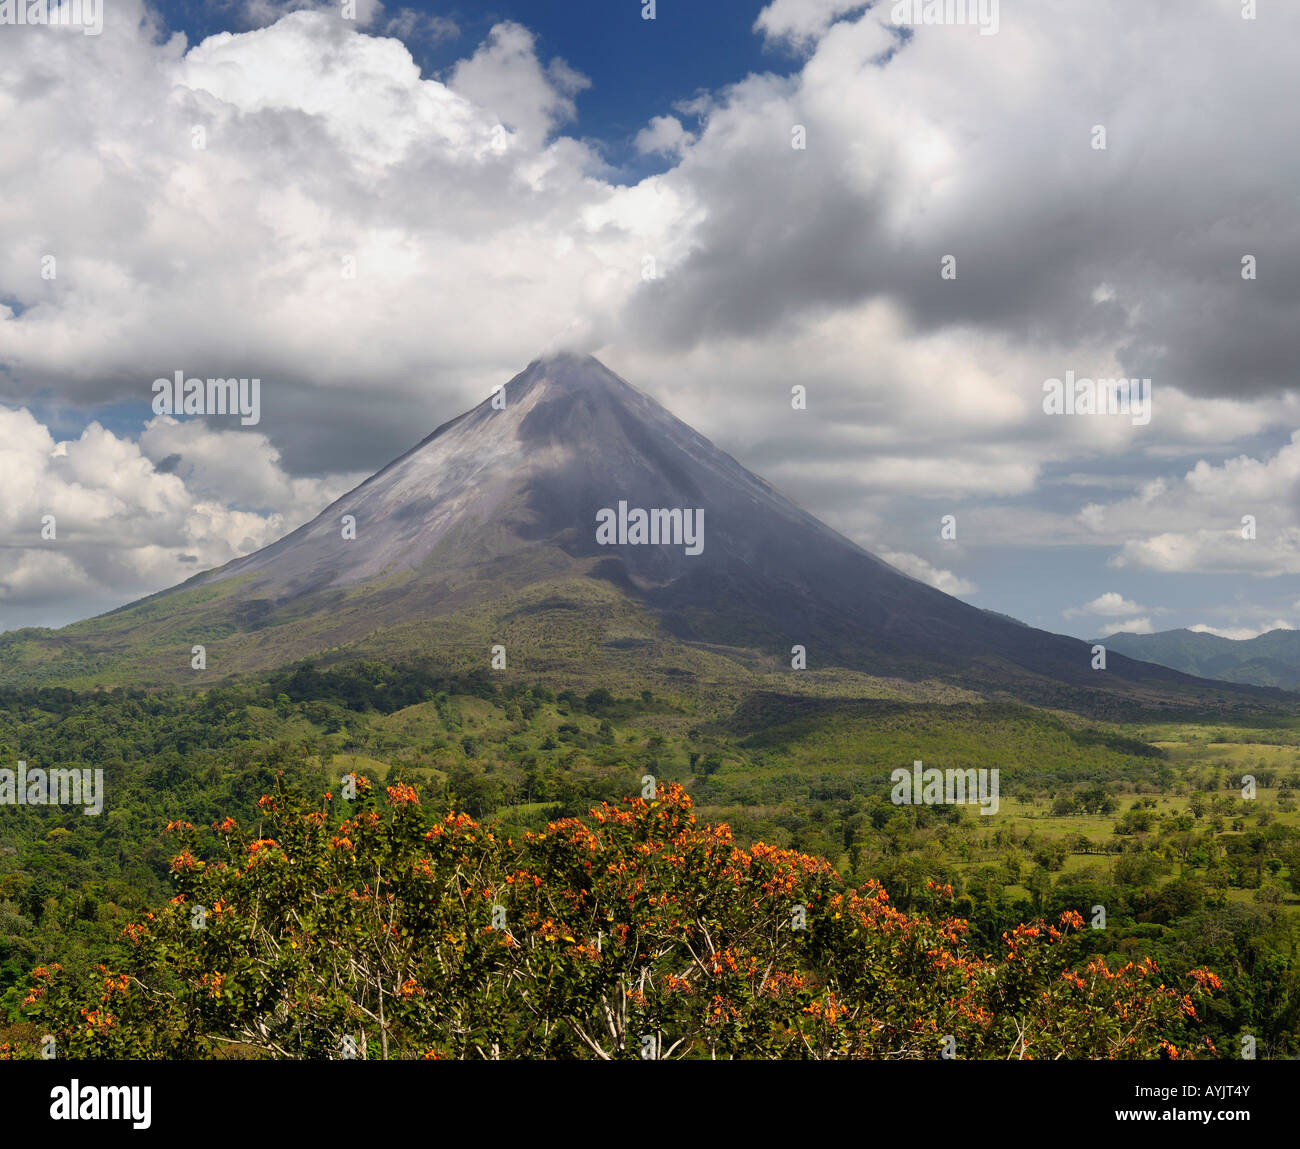 Smoking Arenal Volcano on San Carlos Plains in Costa Rica with orange Poro Tree flowers Stock Photo